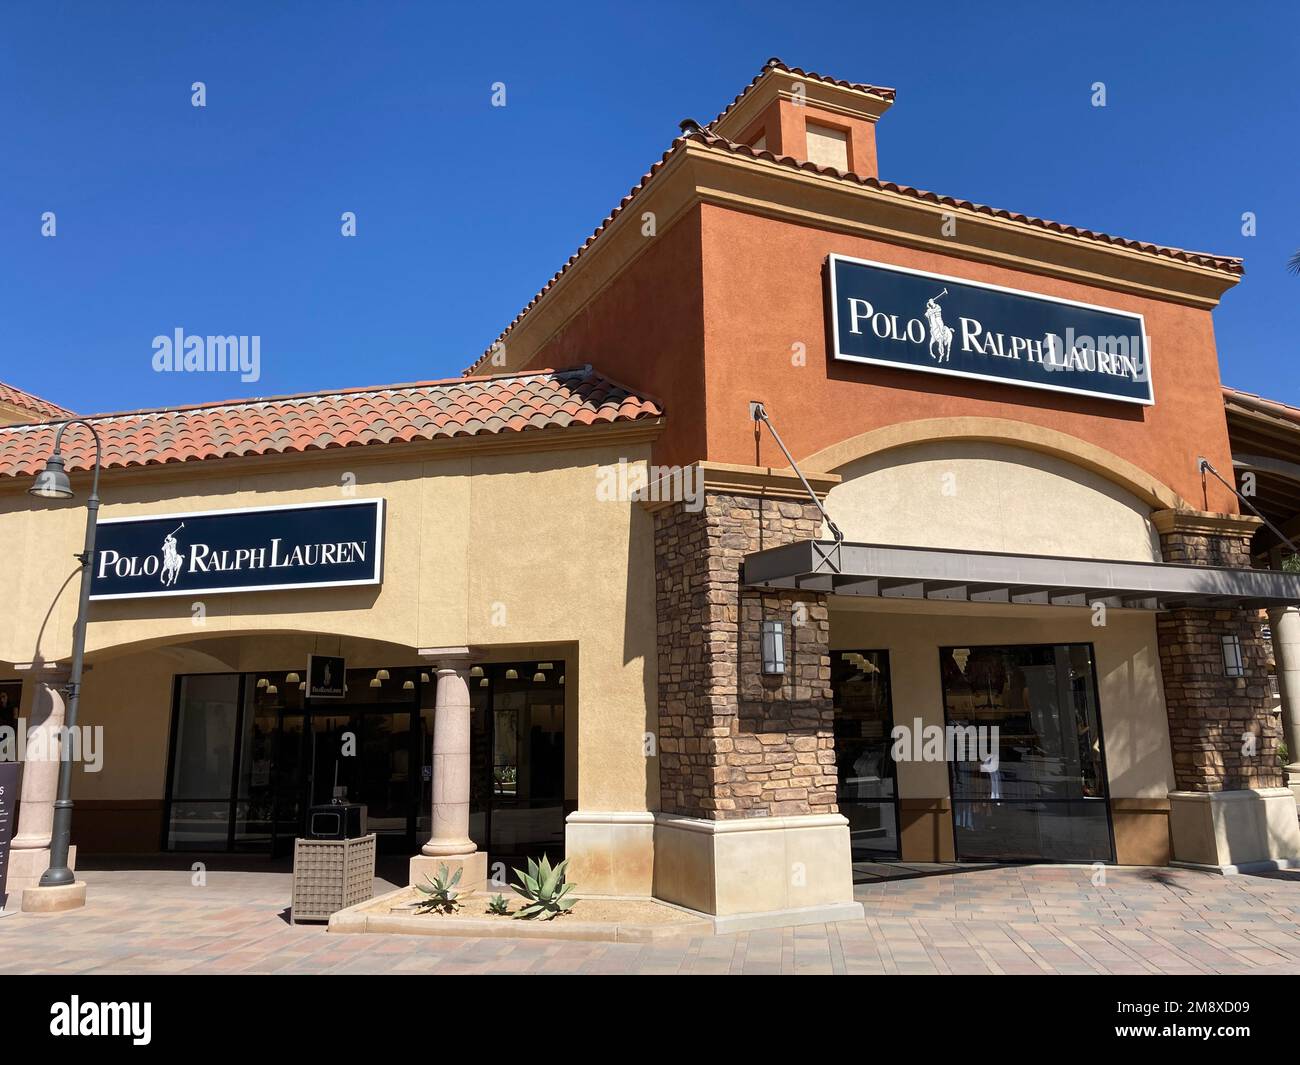 Polo Ralph Lauren at Allen Premium Outlets® - A Shopping Center in